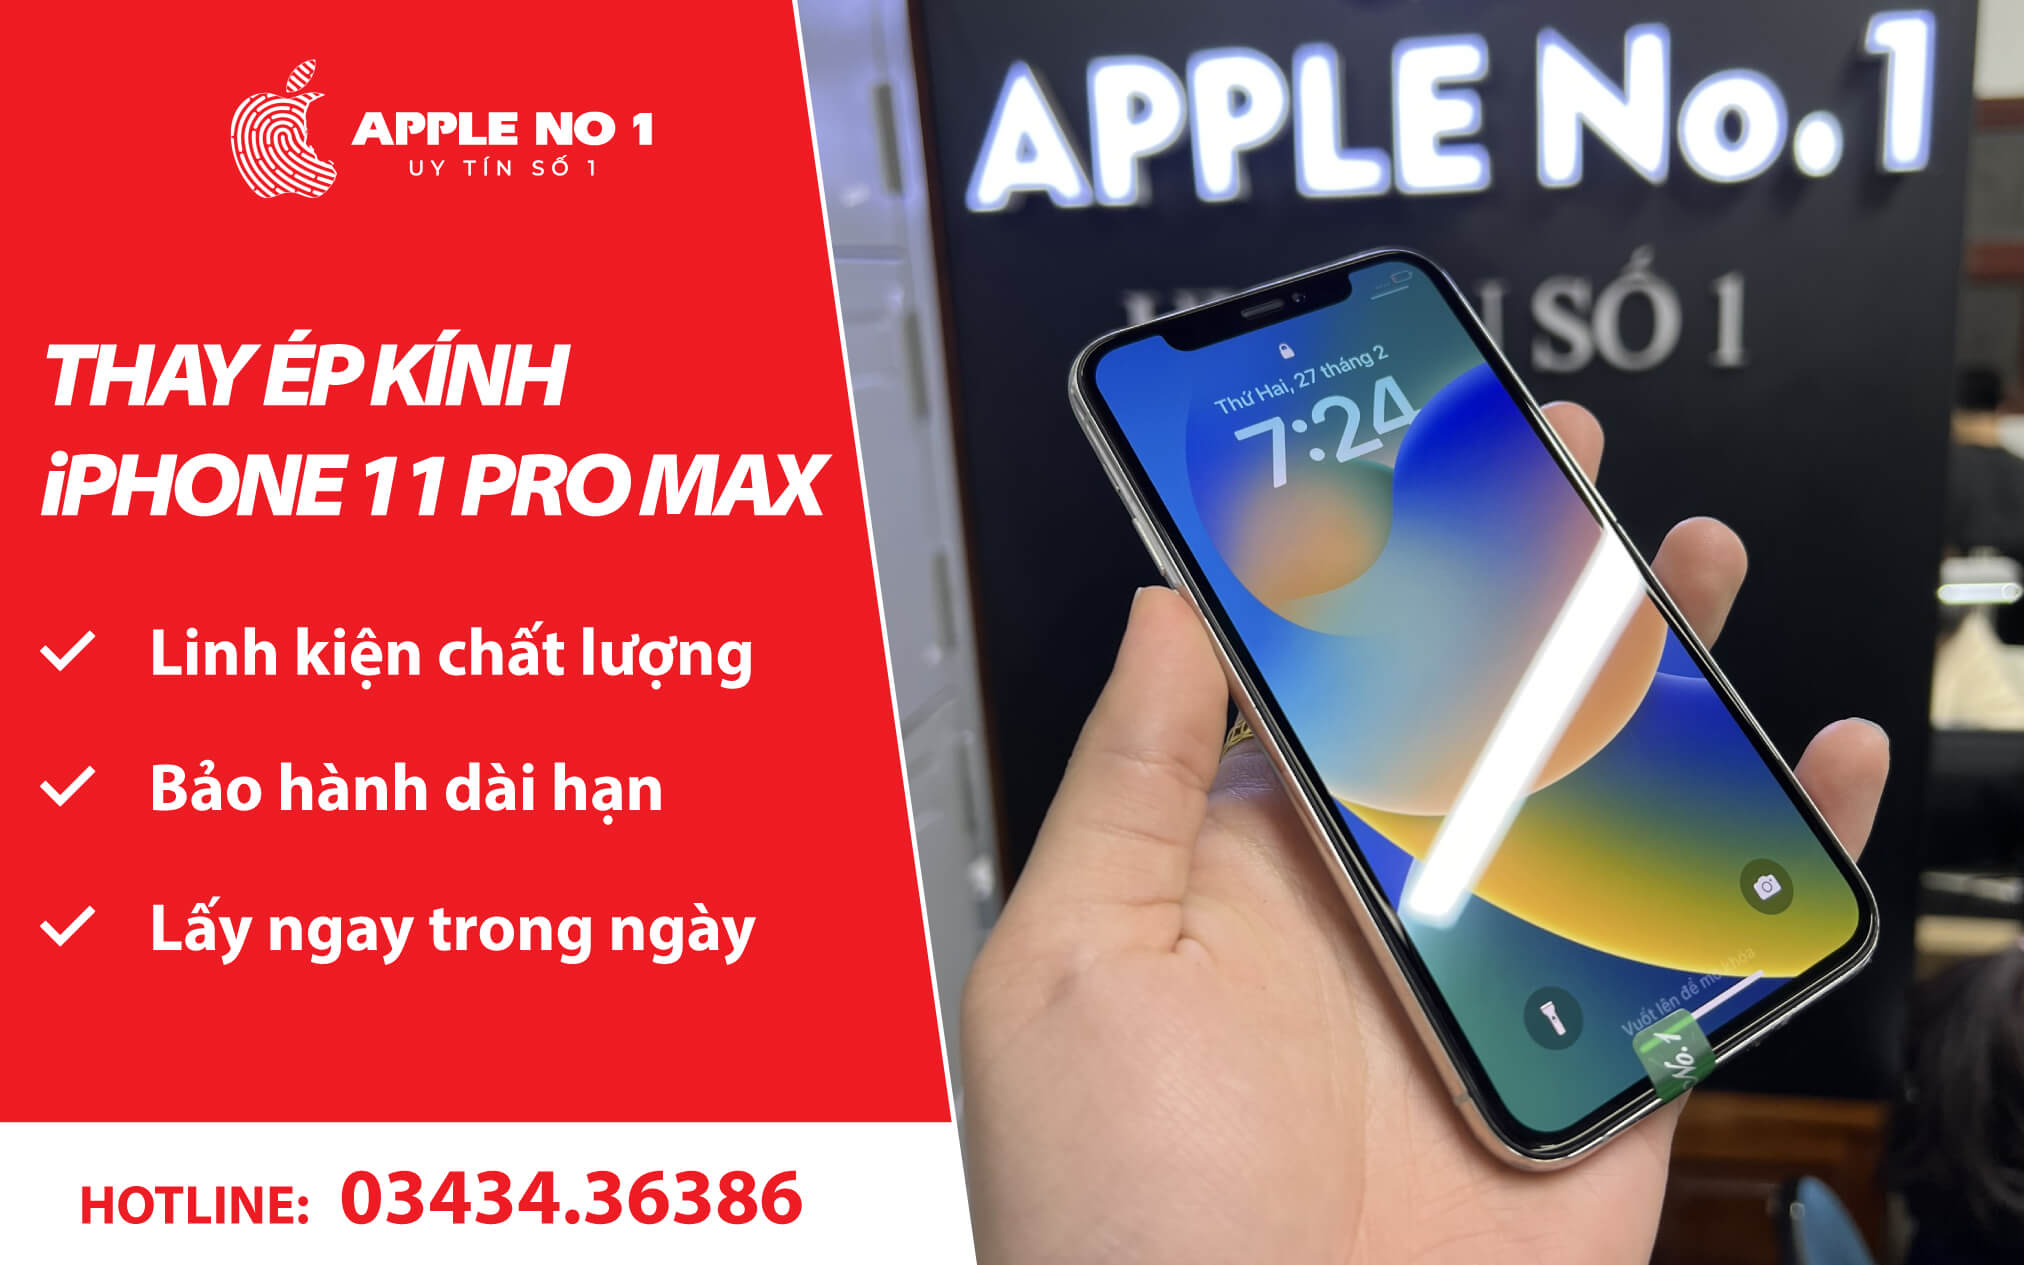 vi sao nen su dung dich vu thay mat kinh iphone 11 pro max tai apple no.1?